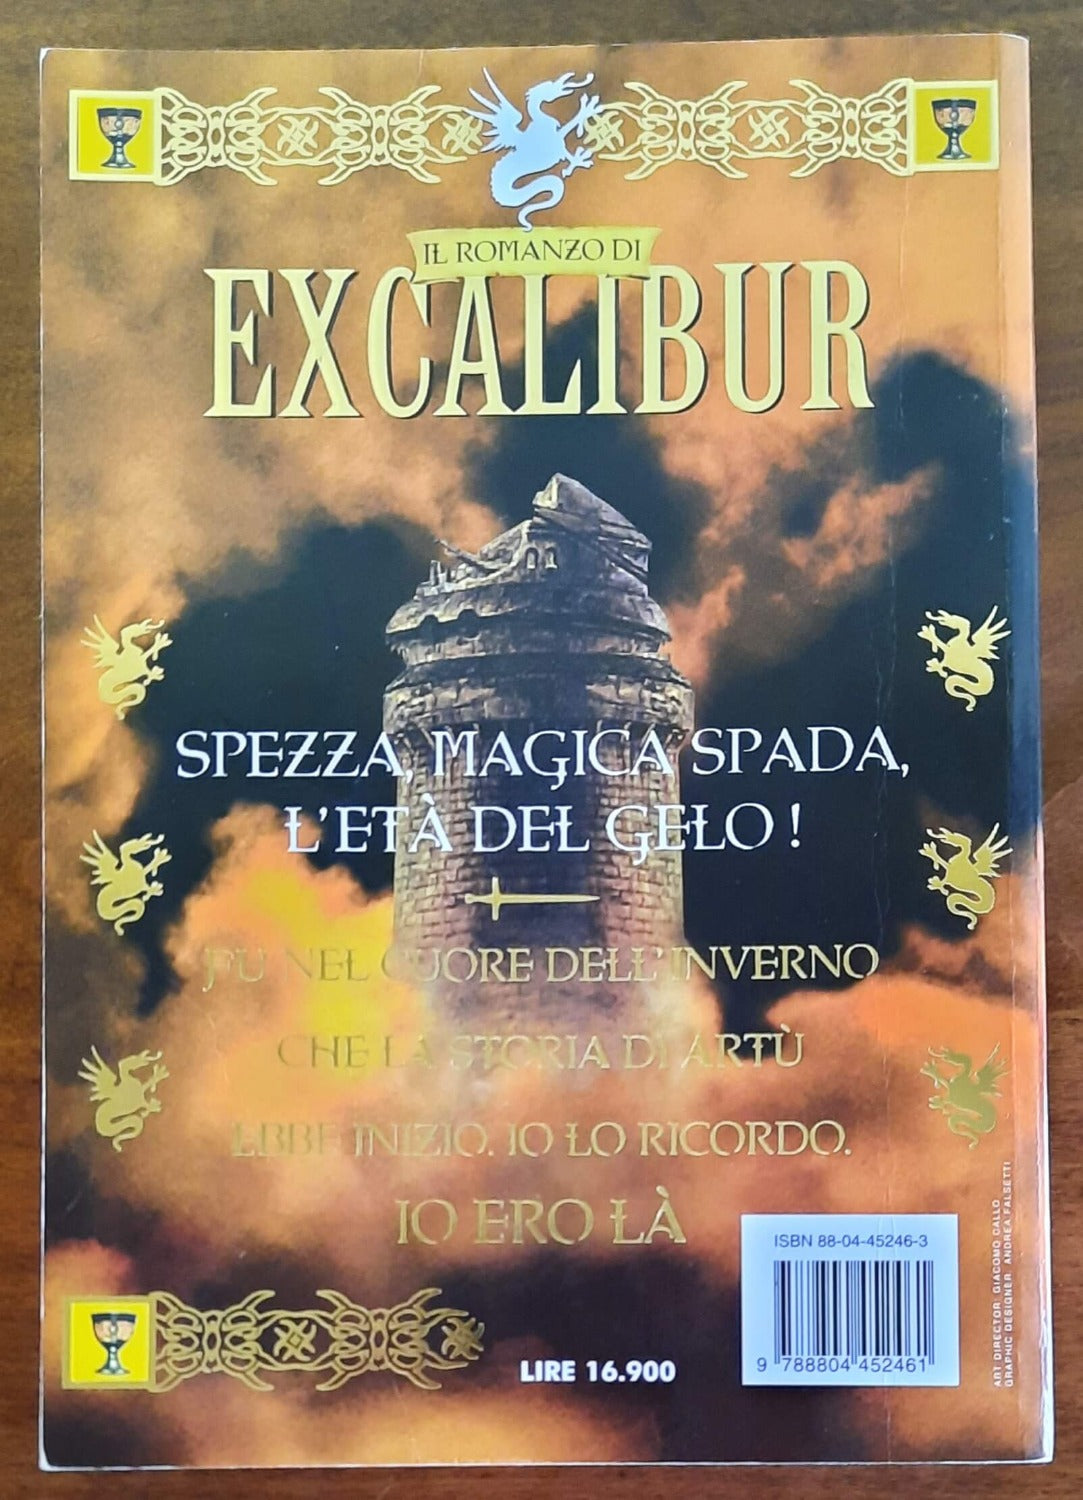 Excalibur. La torre in fiamme - di Bernard Cornwell